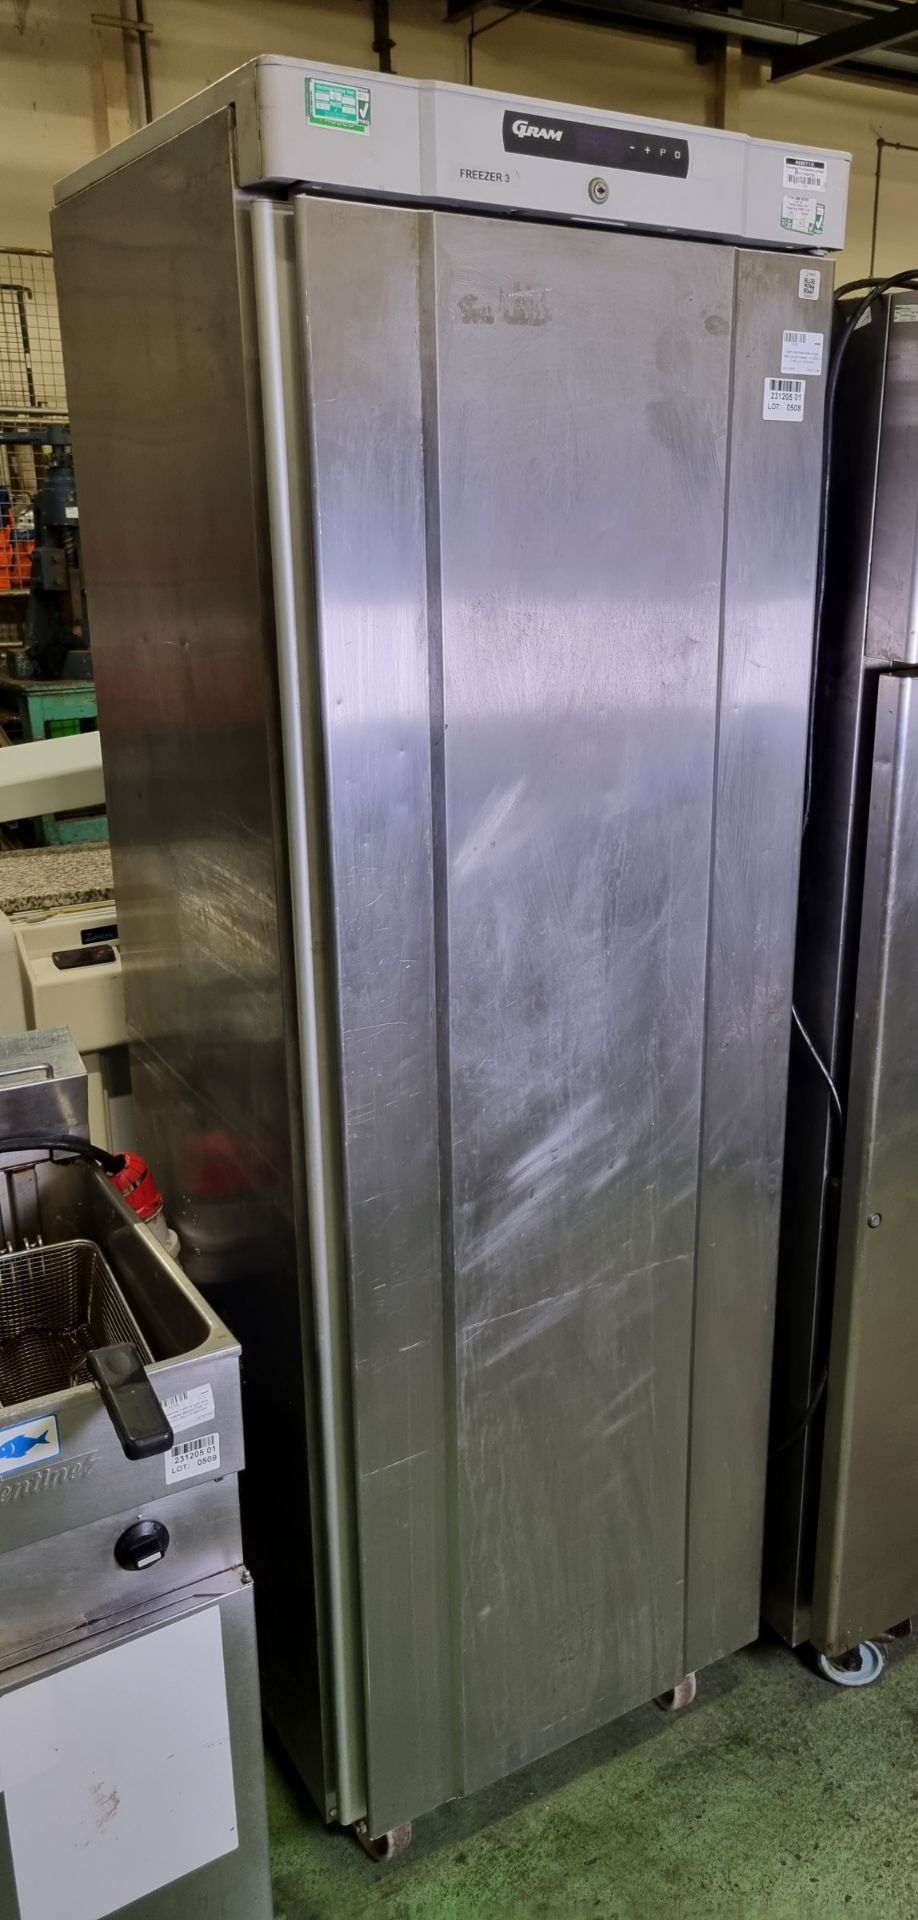 Gram stainless steel single door upright freezer - W 600 x D 650 x H 1910mm - Image 2 of 4